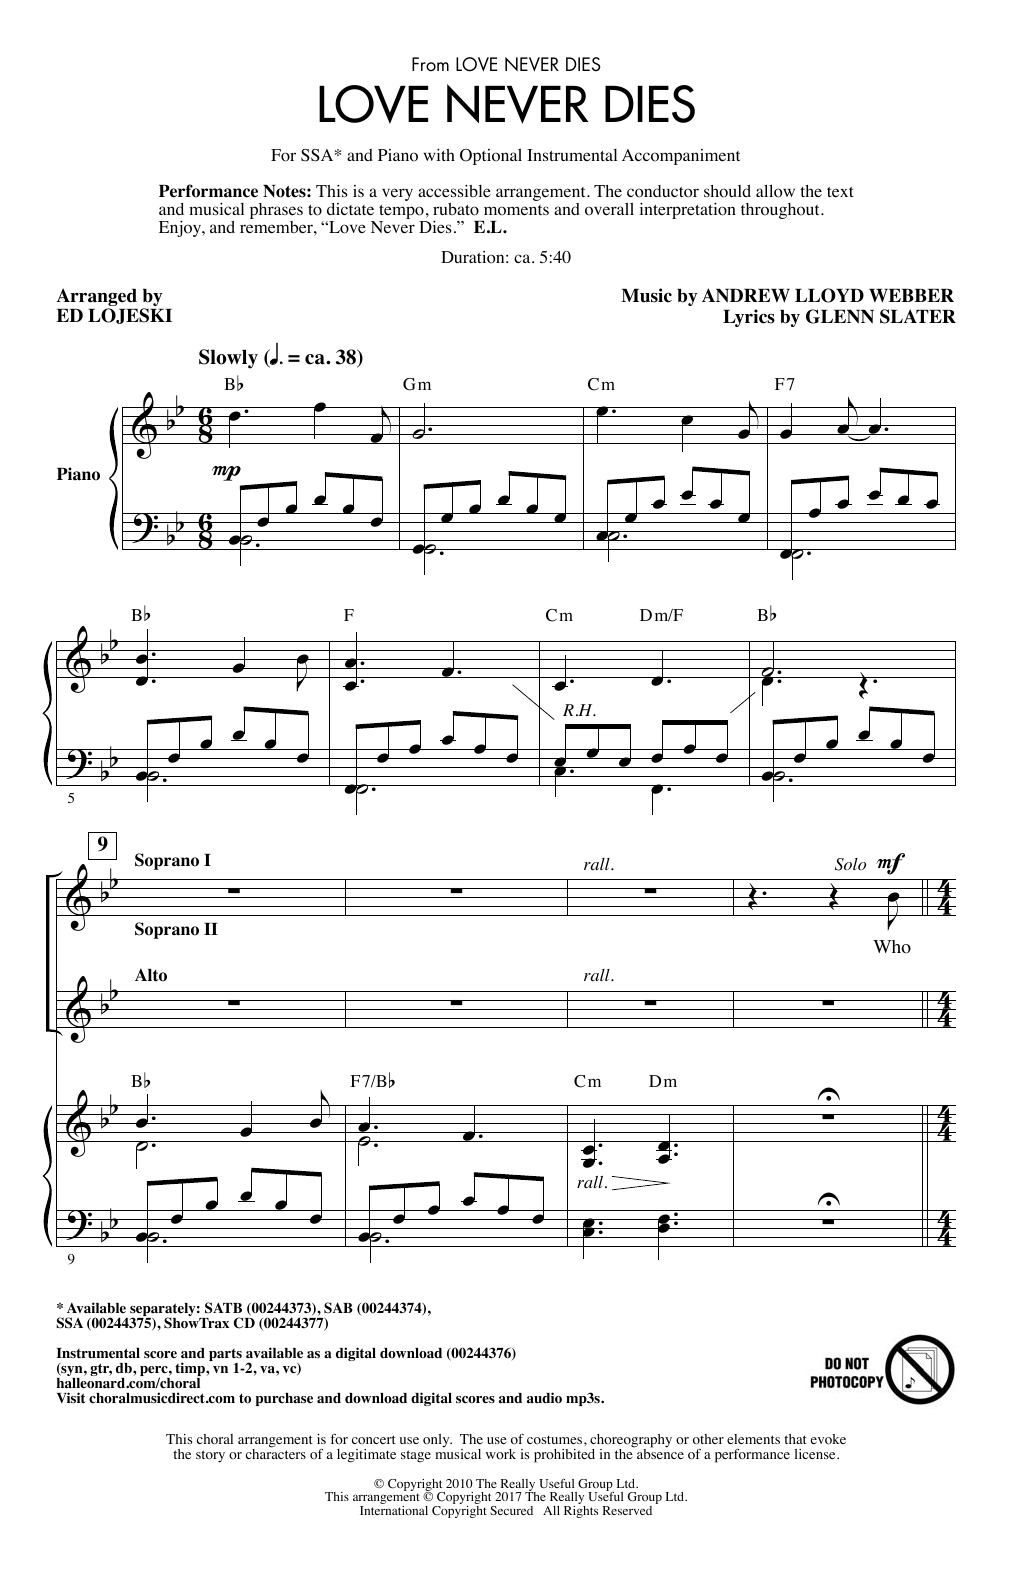 Andrew Lloyd Webber Love Never Dies (arr. Ed Lojeski) Sheet Music Notes & Chords for SSA - Download or Print PDF